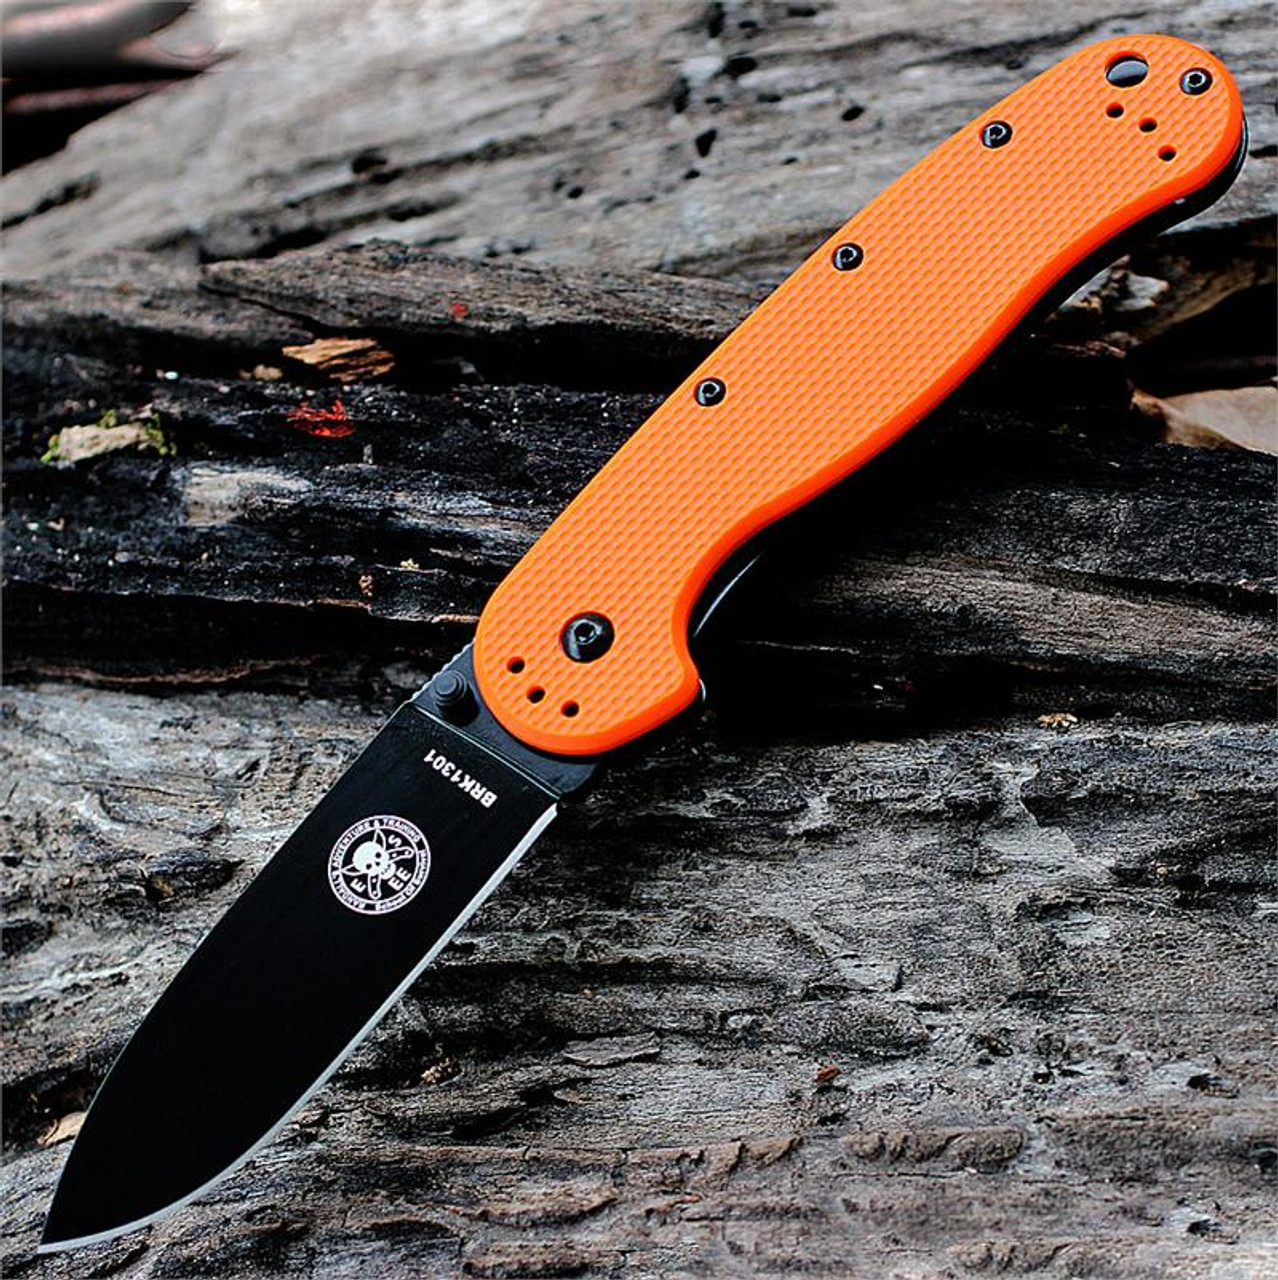 BRK Avispa Folder, Orange Nylon handles, Black AUS-8 Blade, Plain Edge, Design by Esee Knives